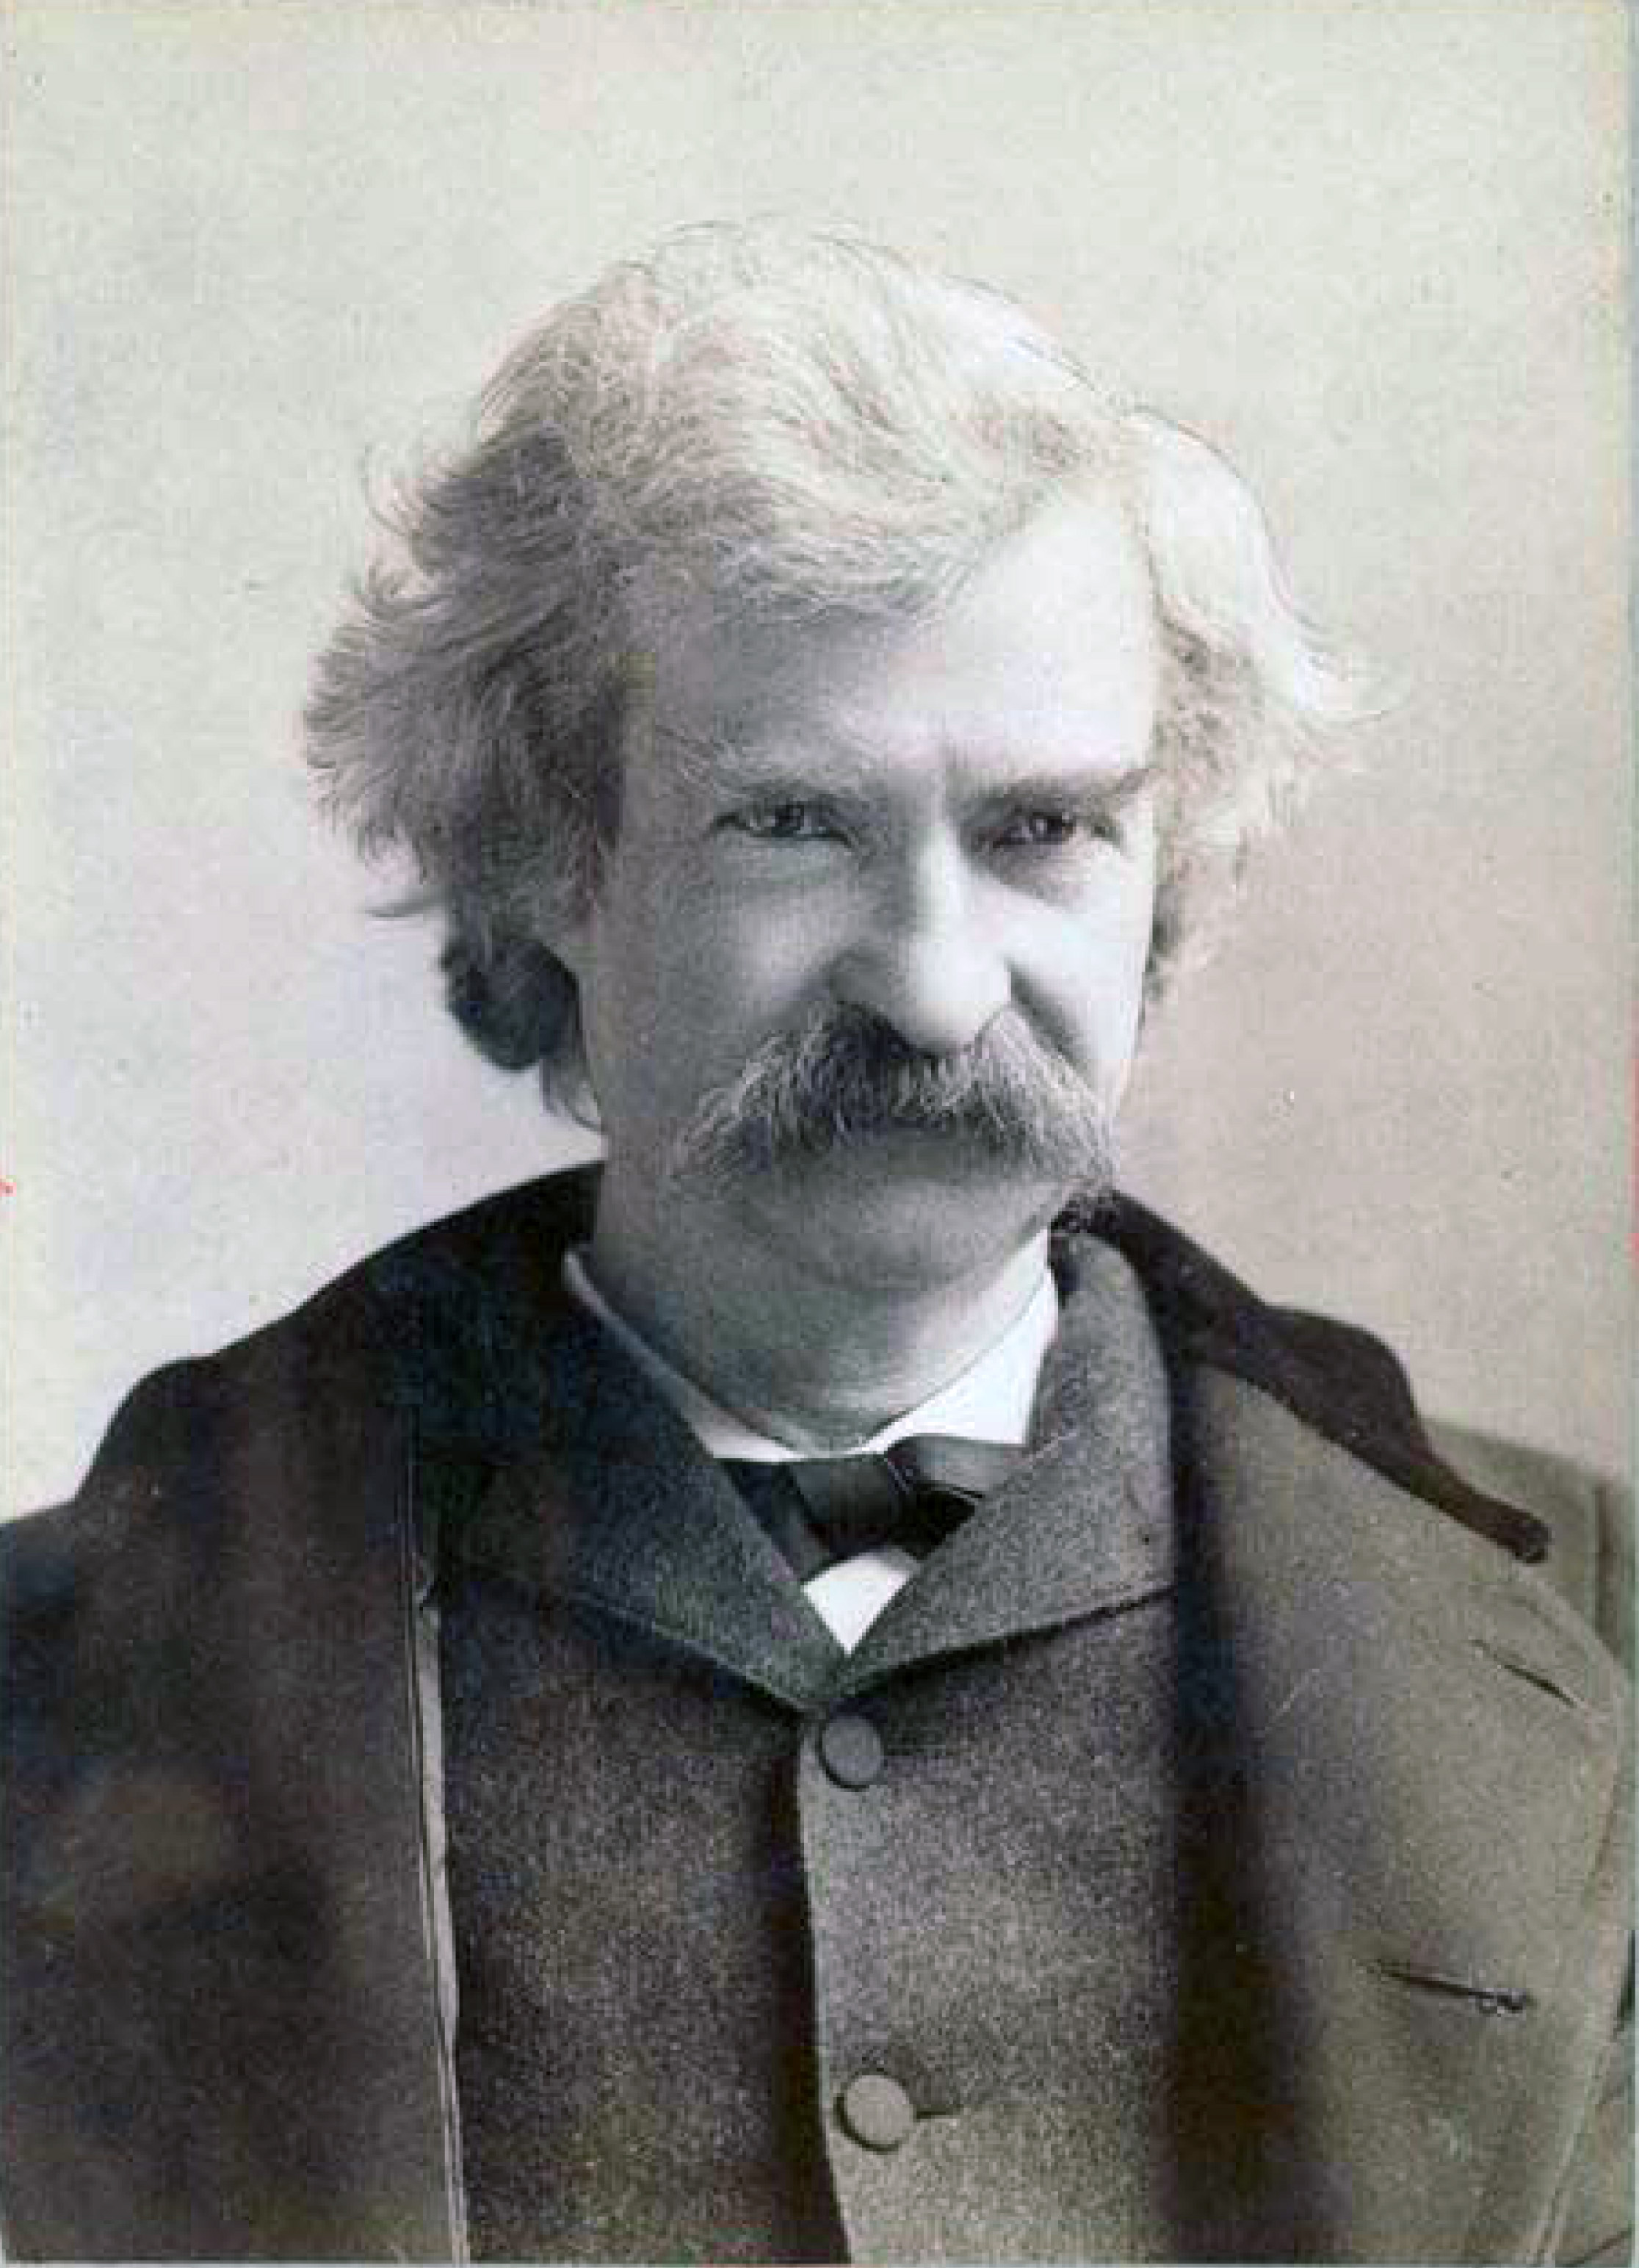 Mark Twain - Wikipedia